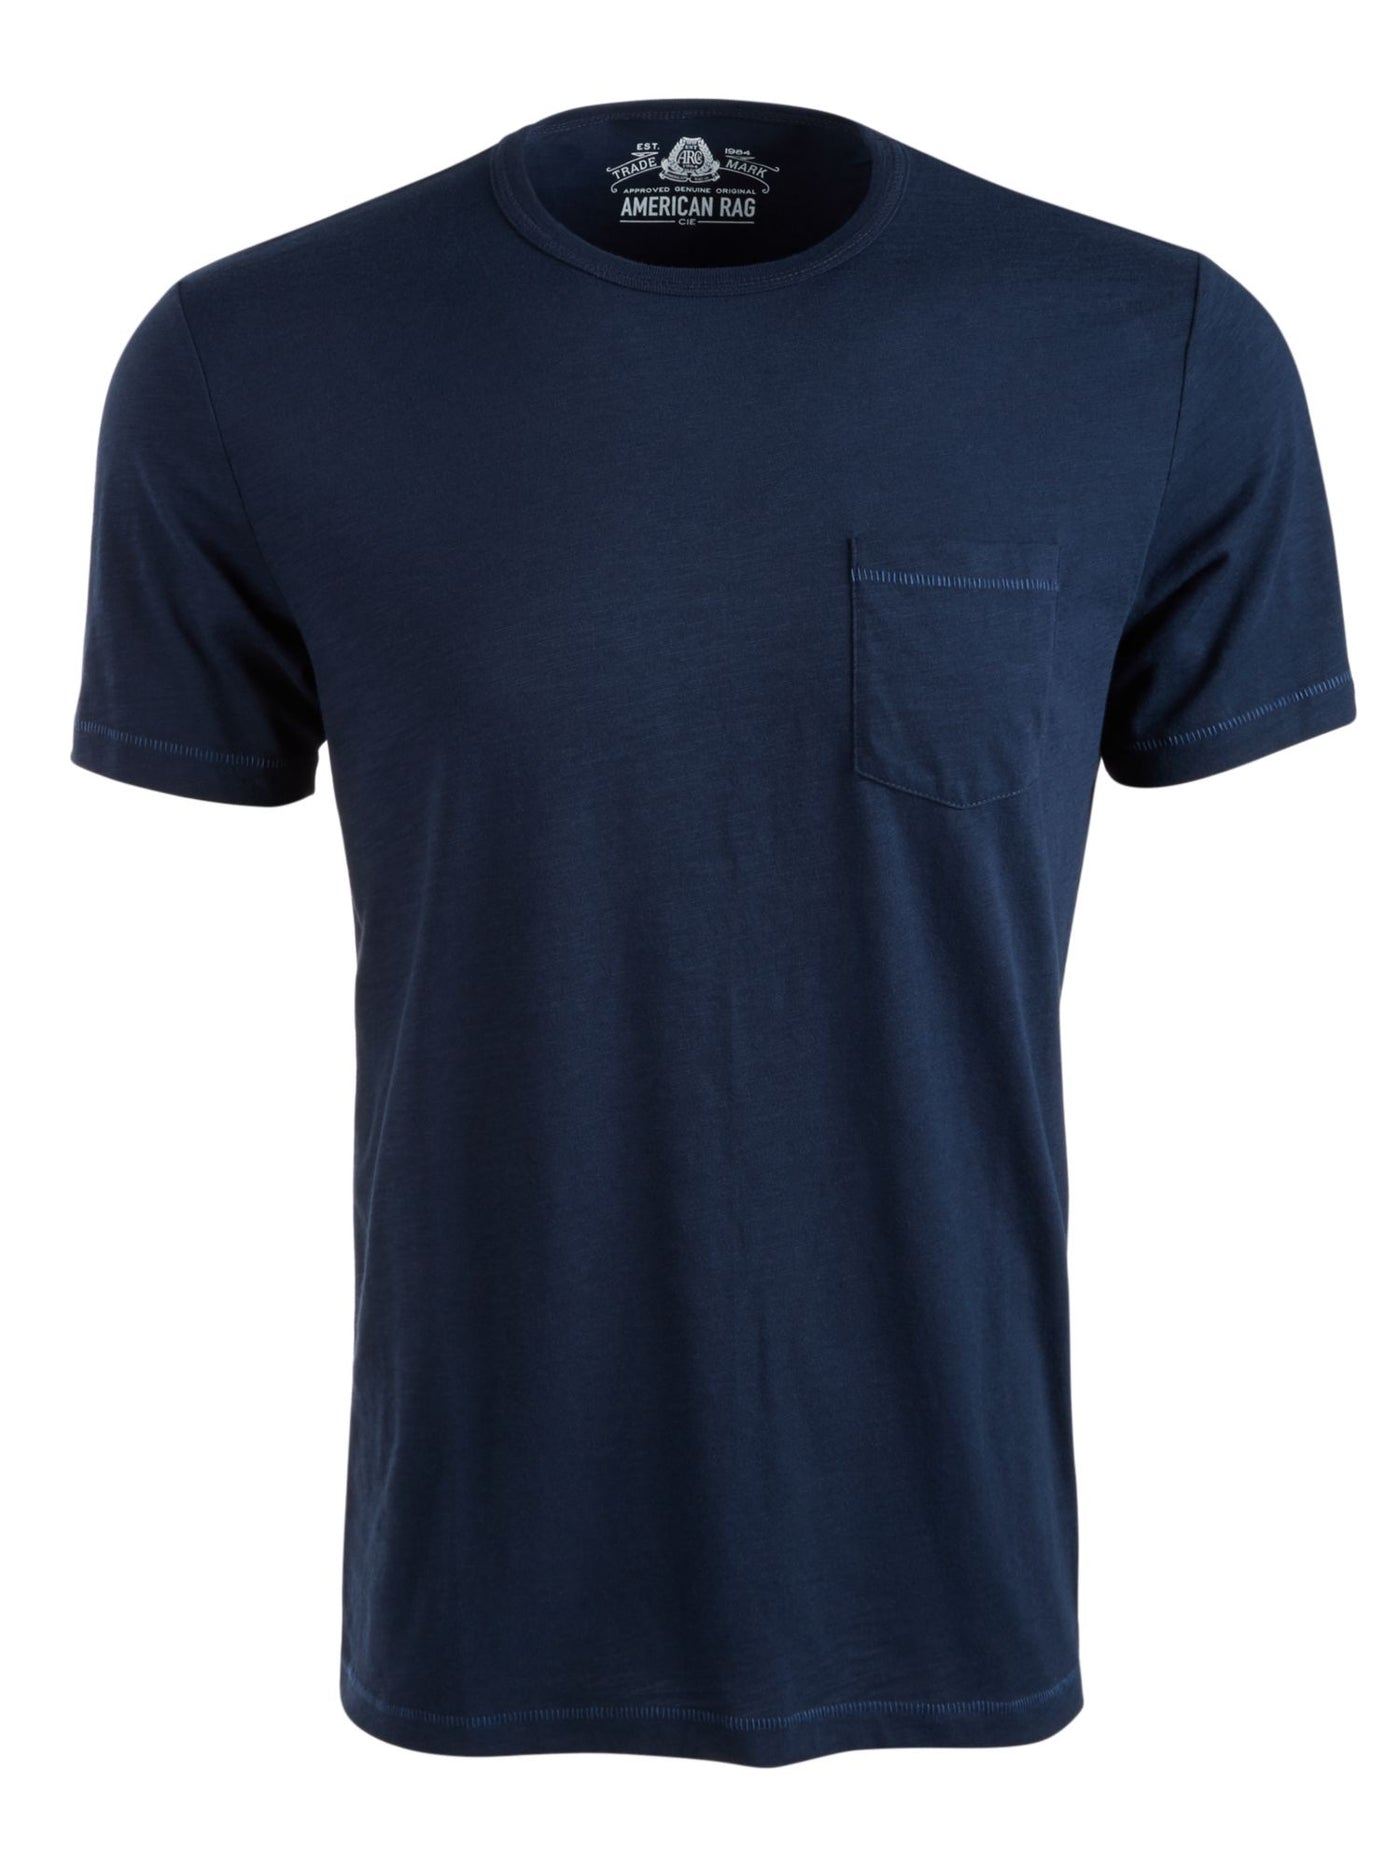 AMERICAN RAG Mens Navy Short Sleeve Classic Fit Cotton Blend T-Shirt XL